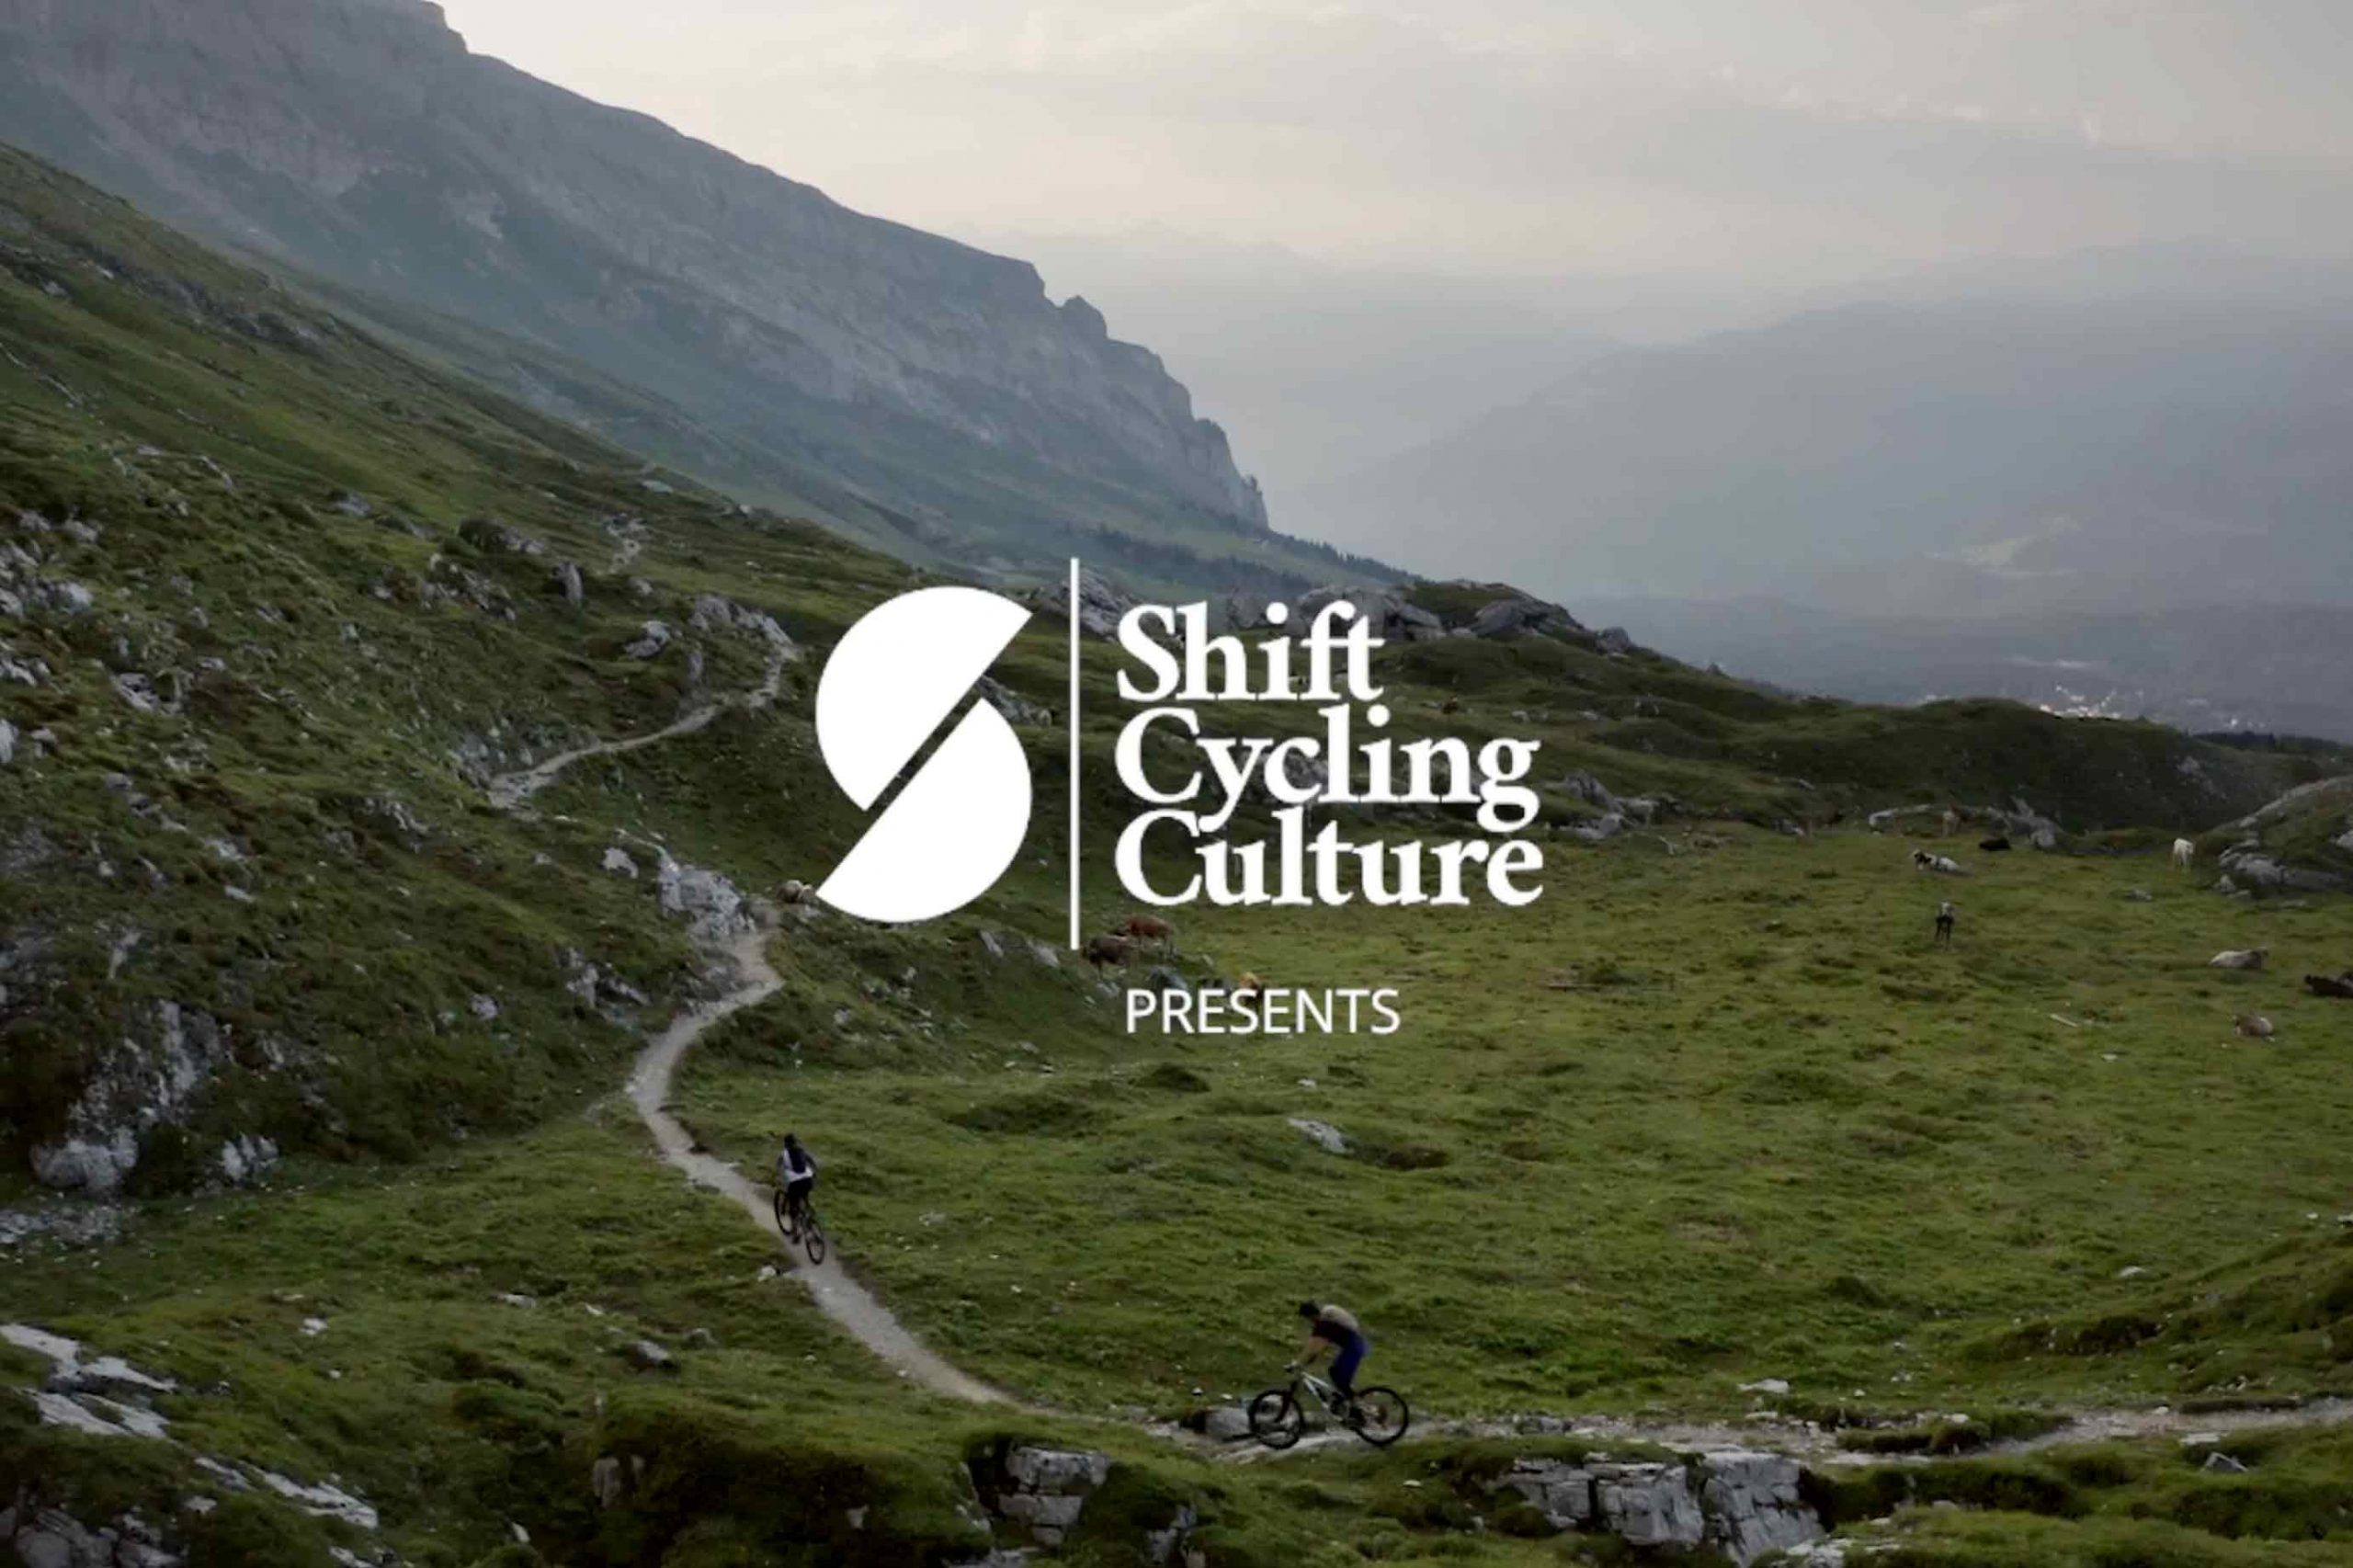 Shift cycling culture